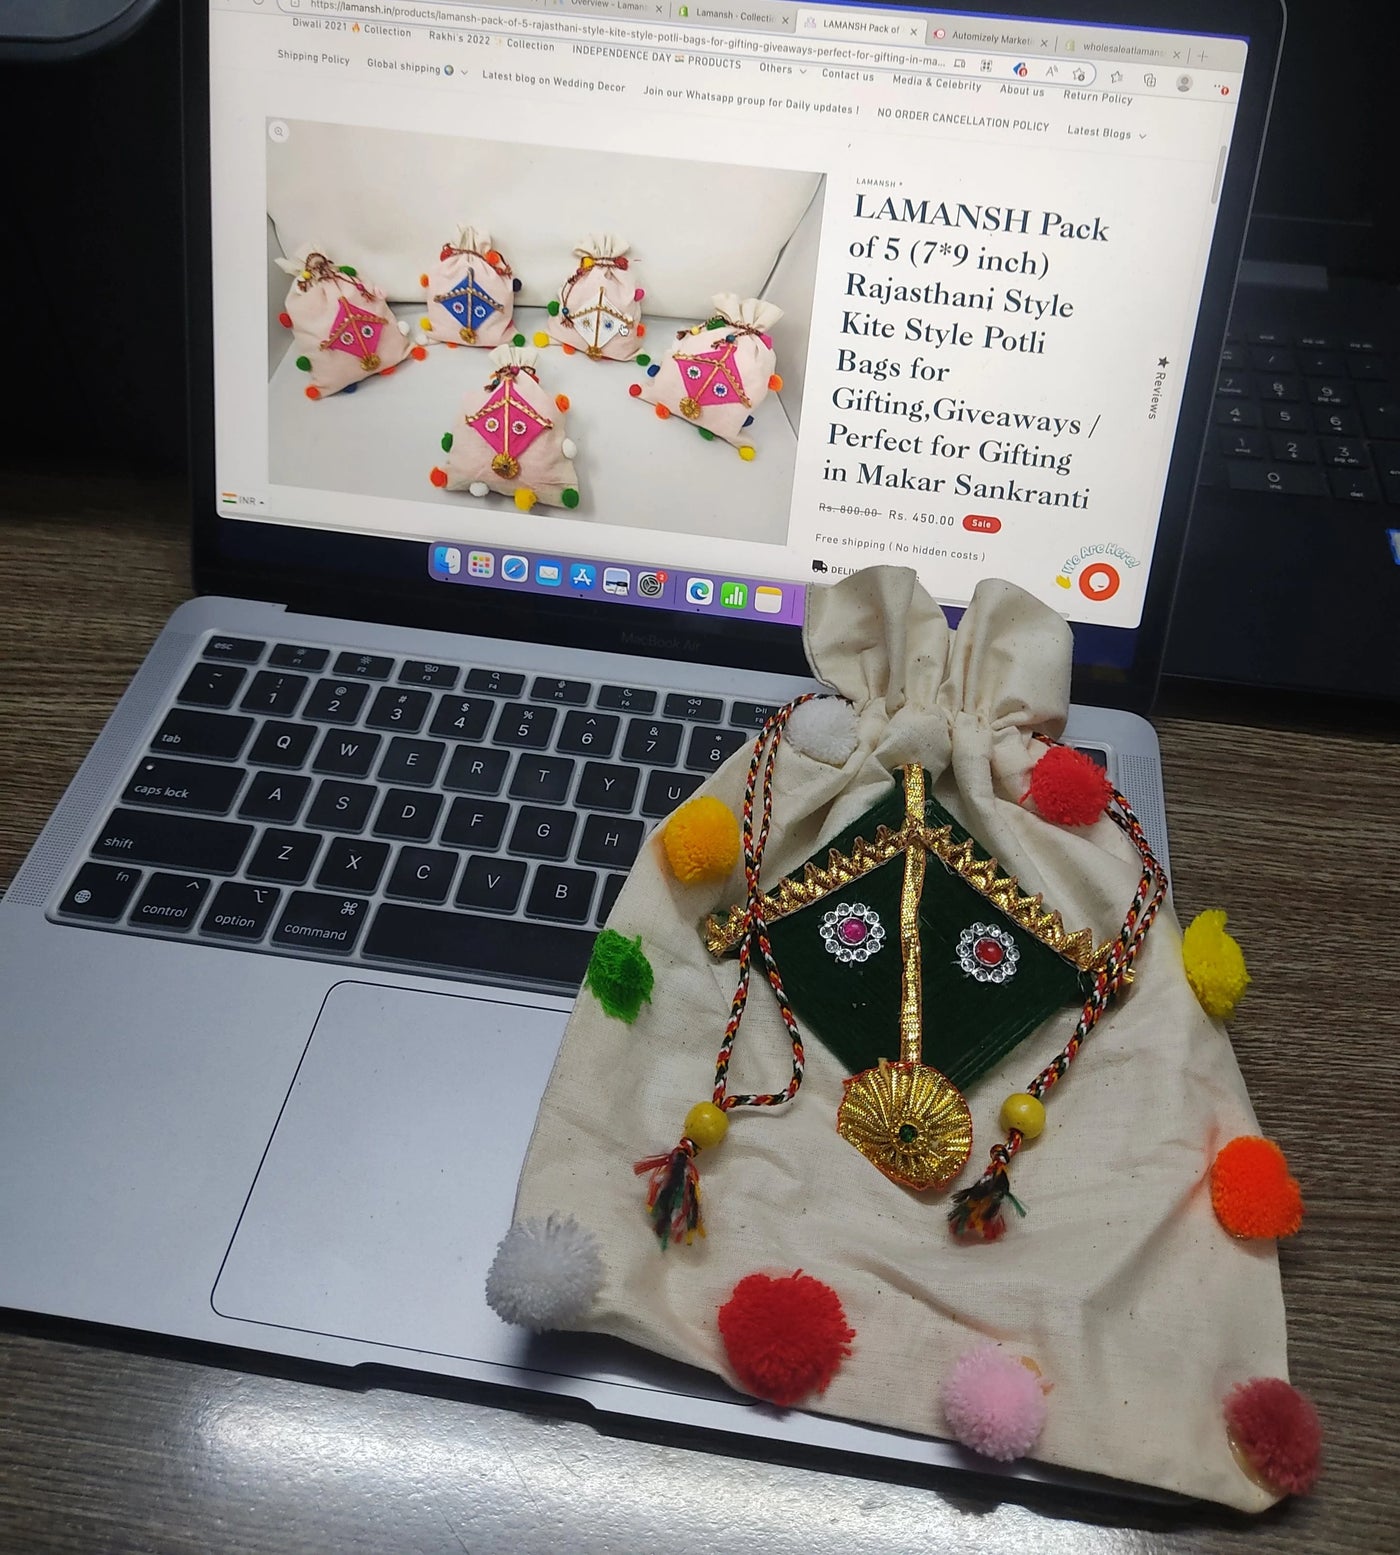 LAMANSH ® Women's Potli Bag LAMANSH Pack of 5 (Size - 7*9 inch) Rajasthani Style Kite Style Potli Bags for Gifting,Giveaways / Perfect for Gifting in Makar Sankranti